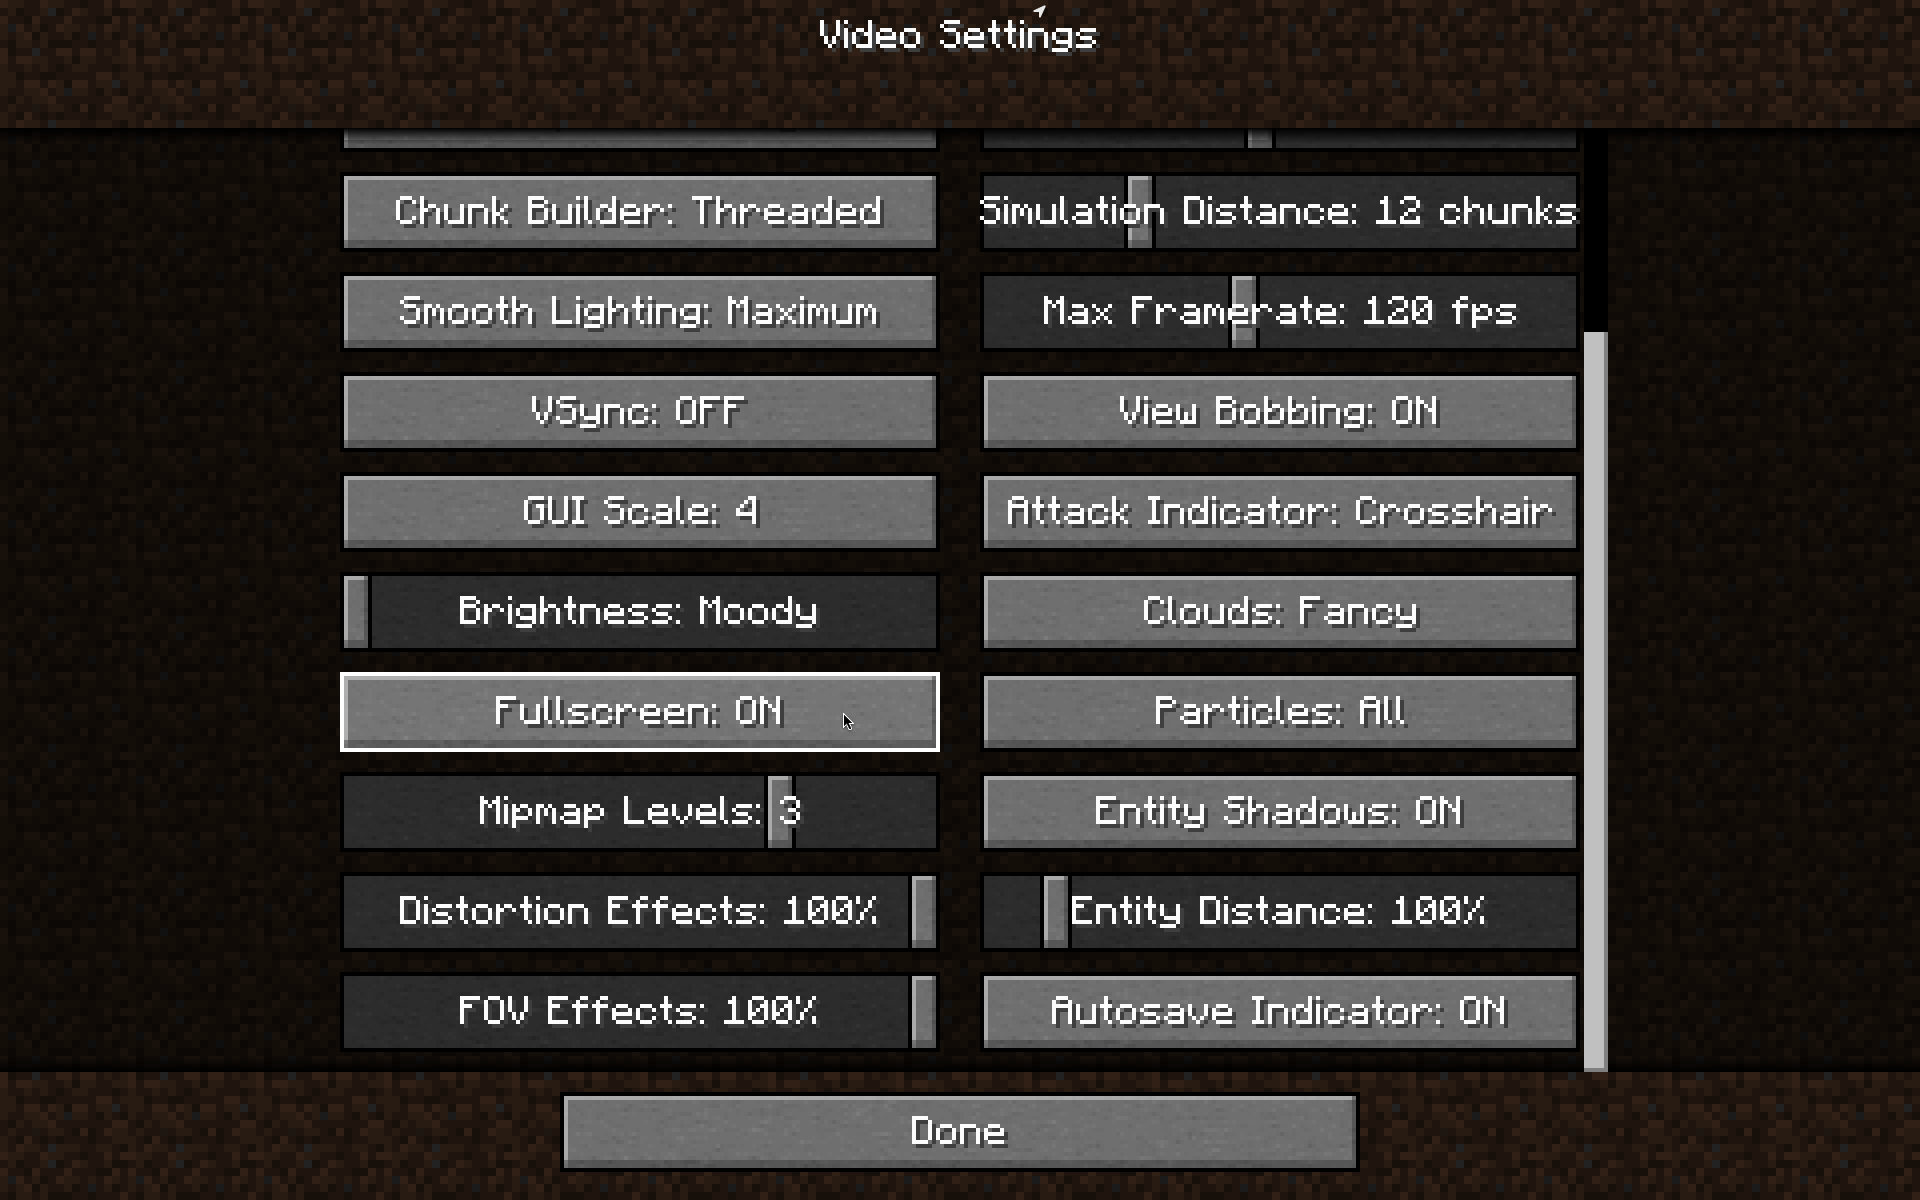 Minecraft video settings showing Fullscreen: ON